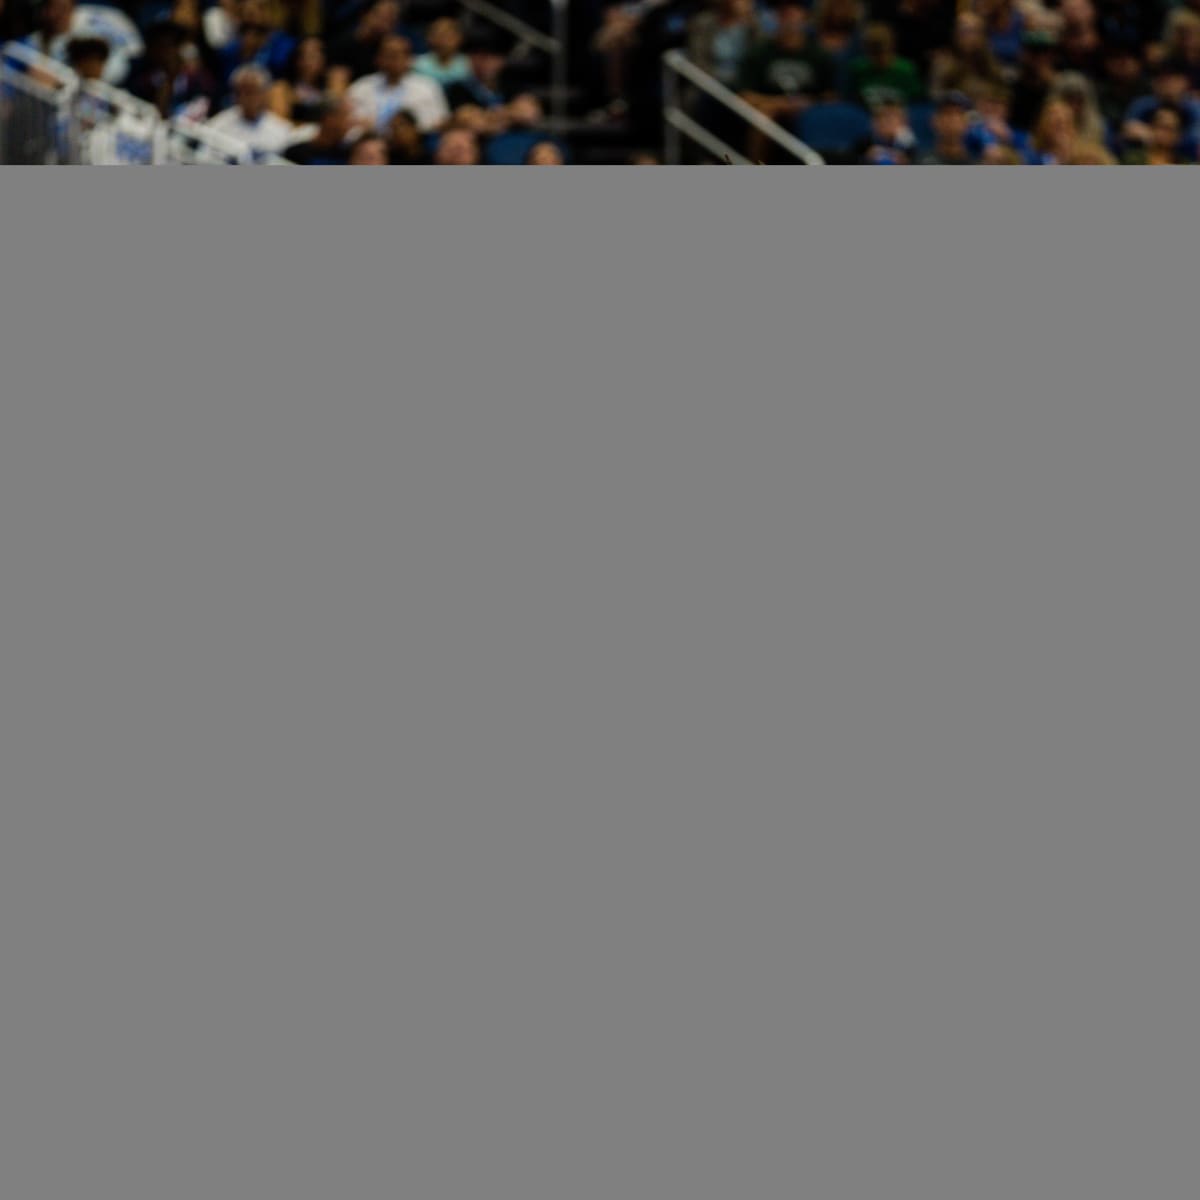 Orlando Magic Big Man Bol Bol: 'Unique' Player in NBA? - Sports Illustrated Orlando Magic News, Analysis, and More